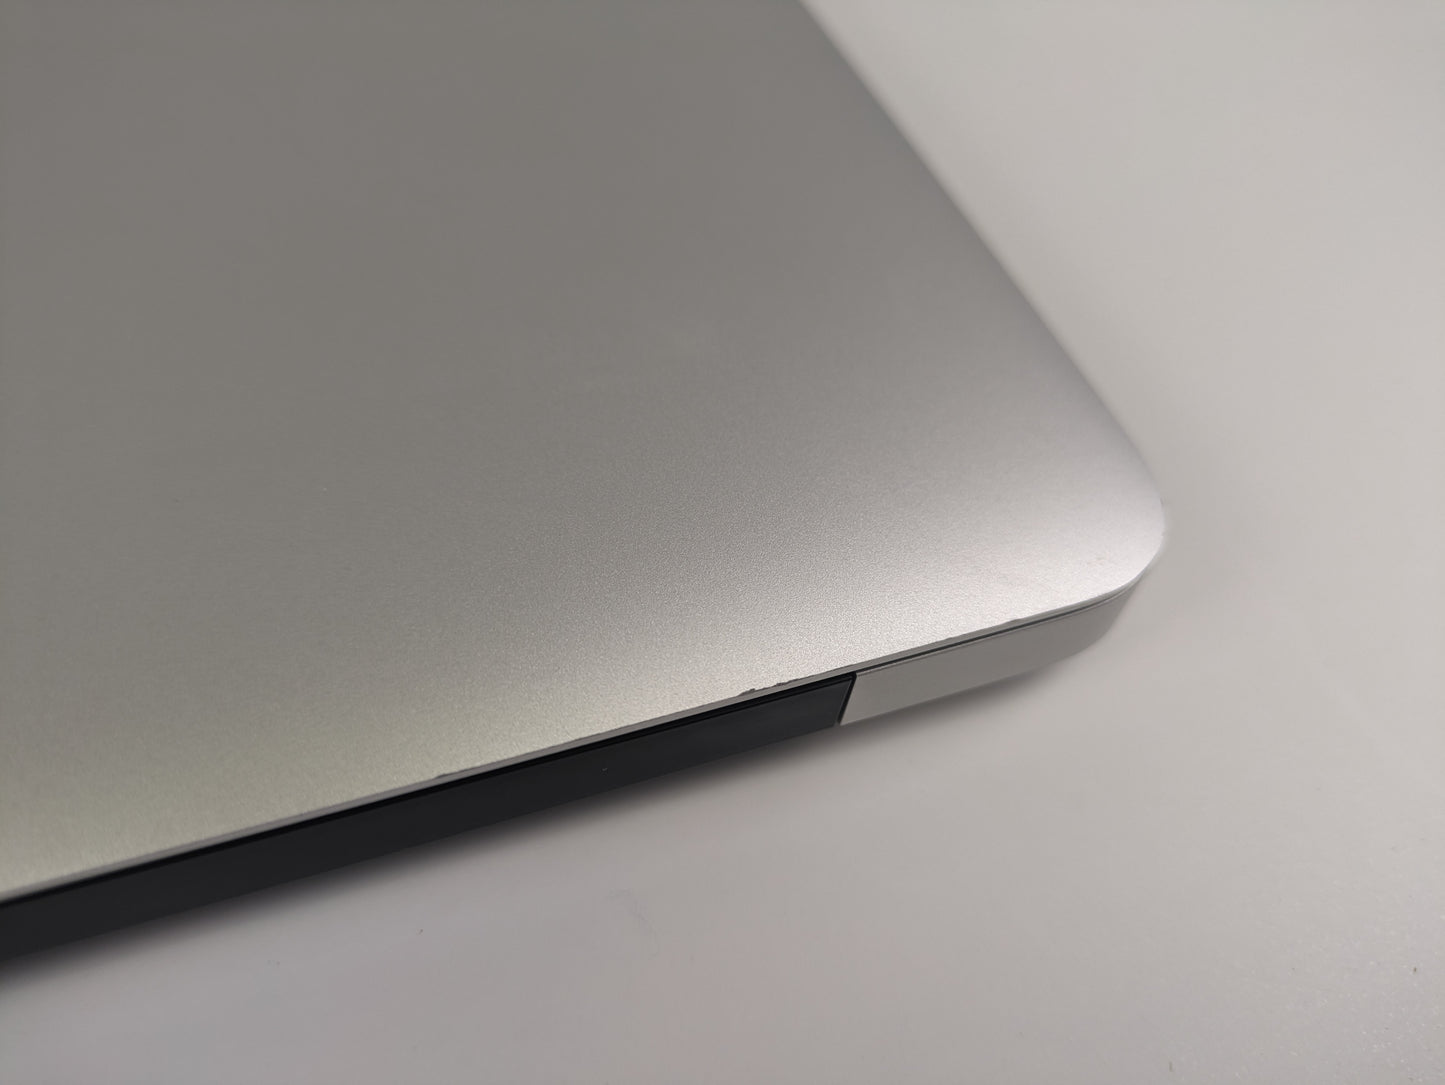 Apple MacBook Air A1466 13" Core i5-5250U 4GB 128GB SSD Laptop - MJVE2LL/A Reconditioned